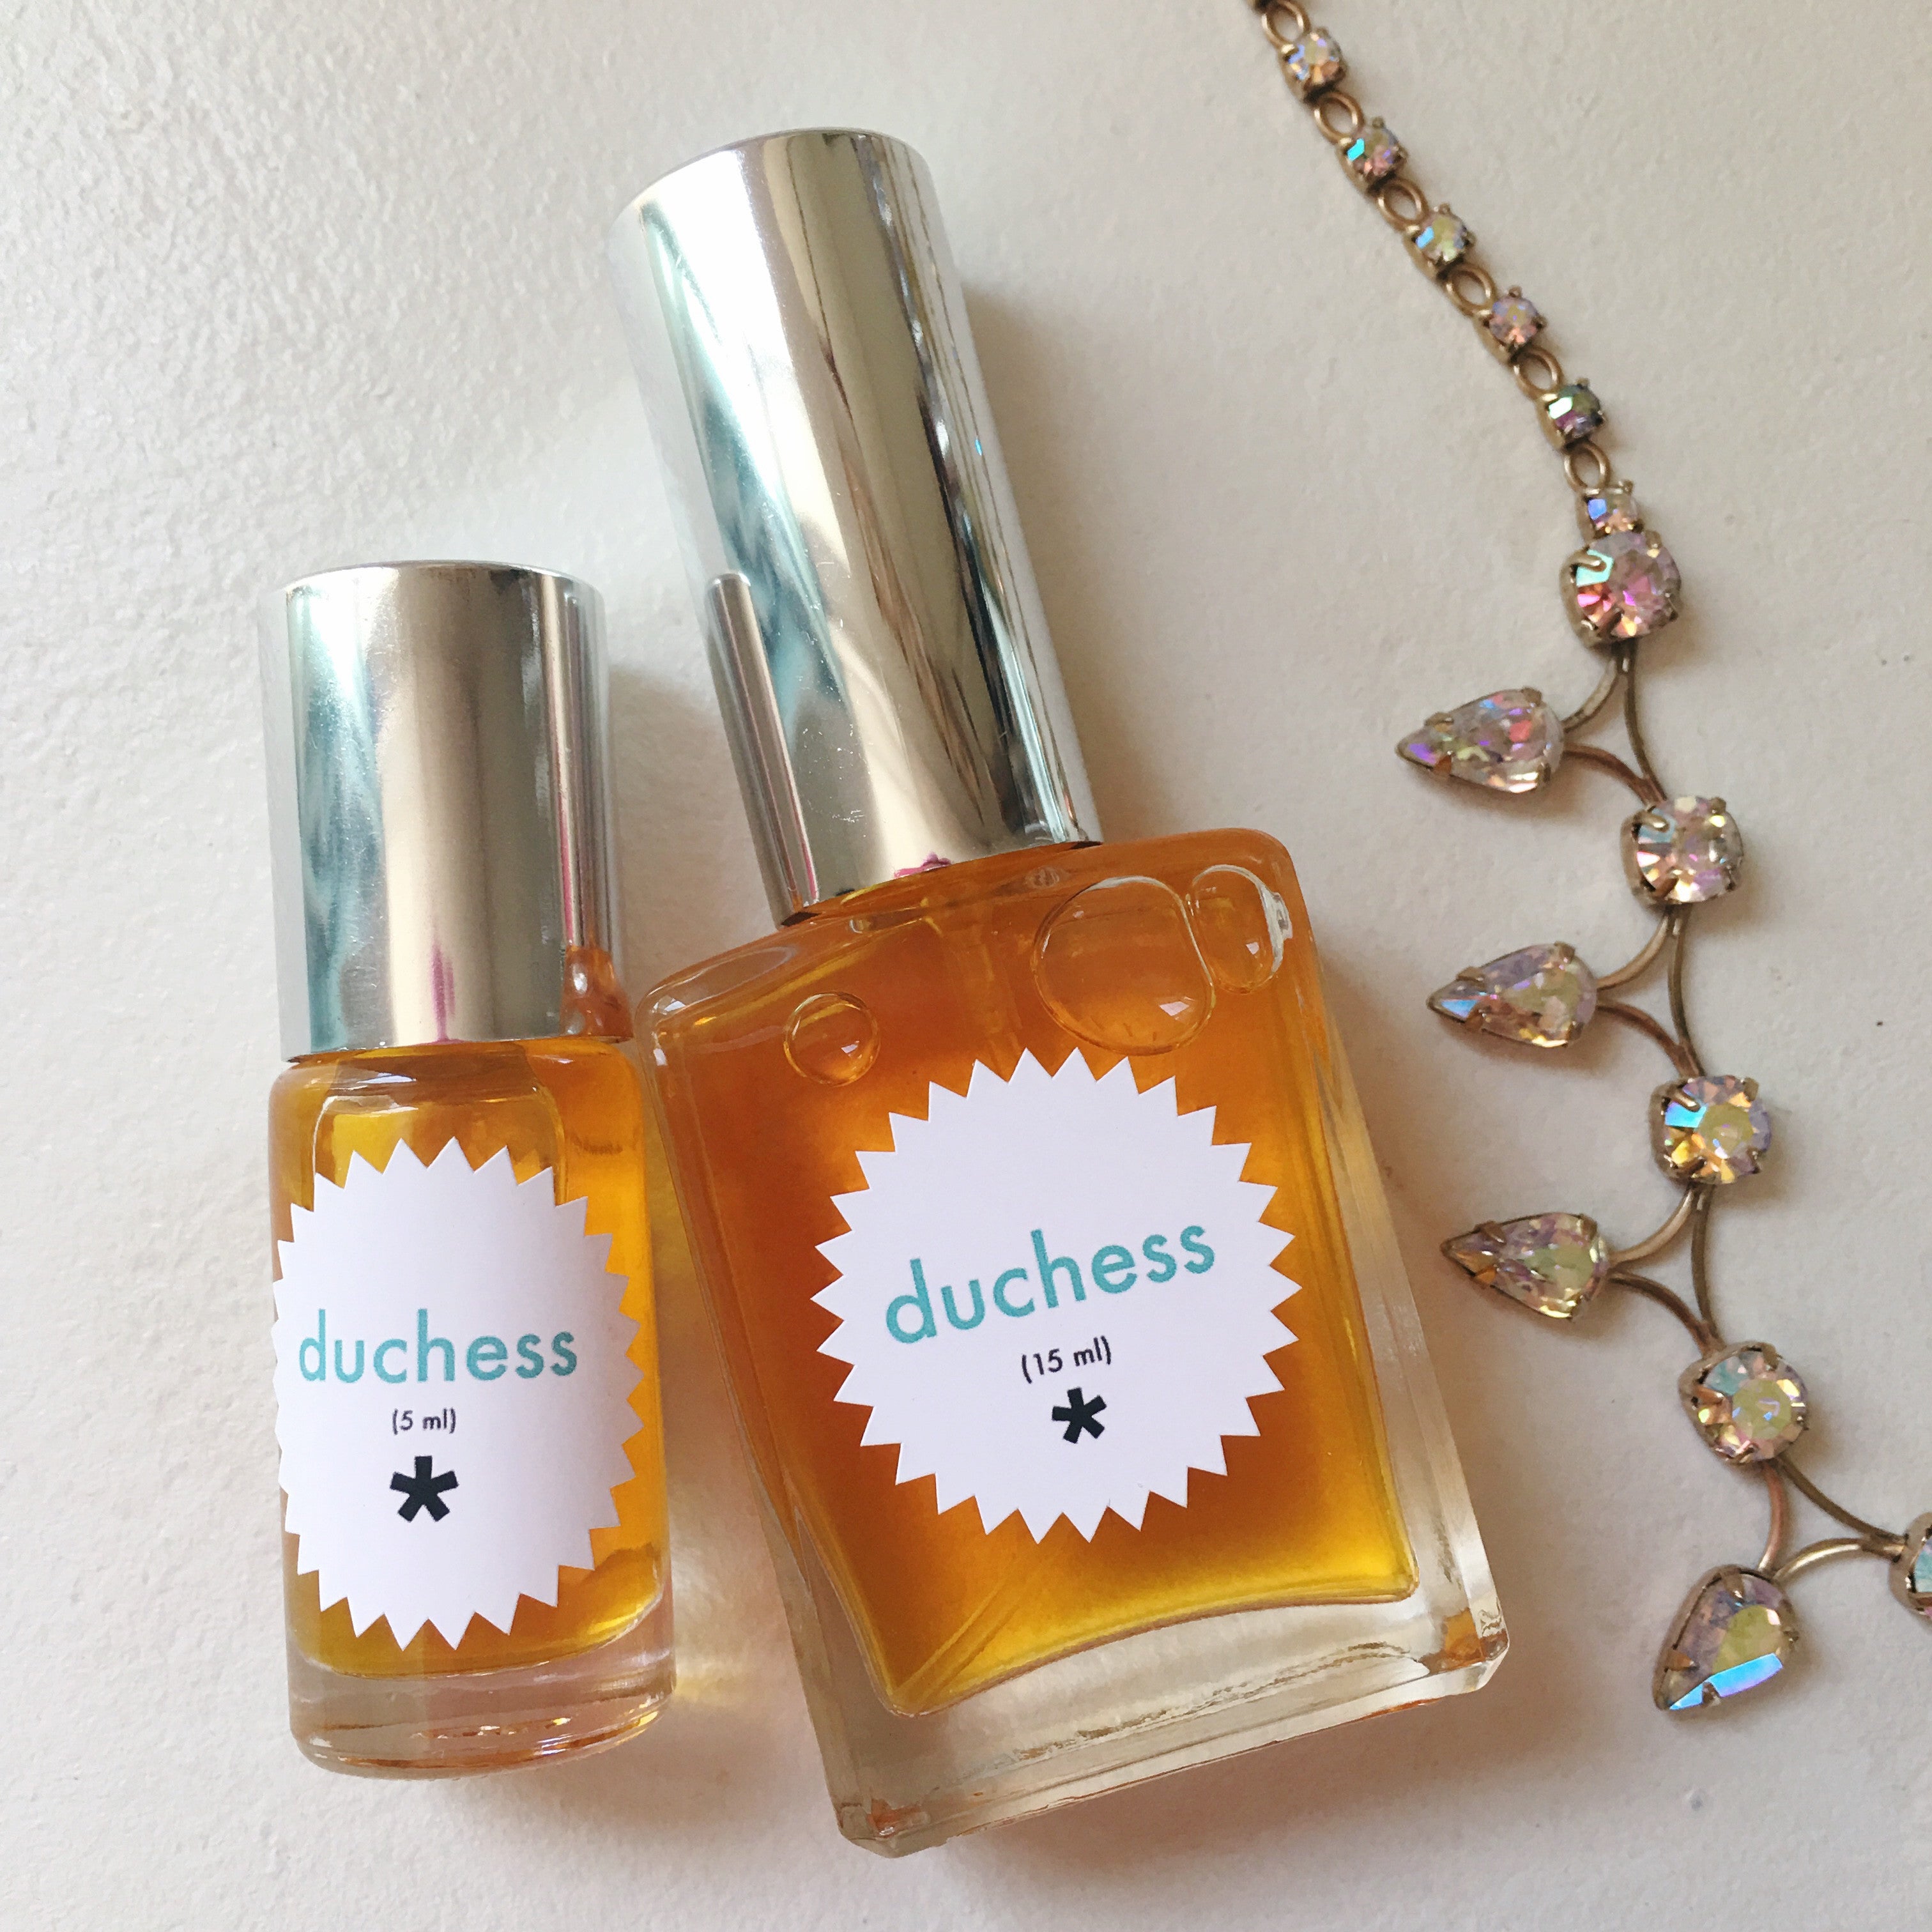 duchess perfume twinkle apothecary 